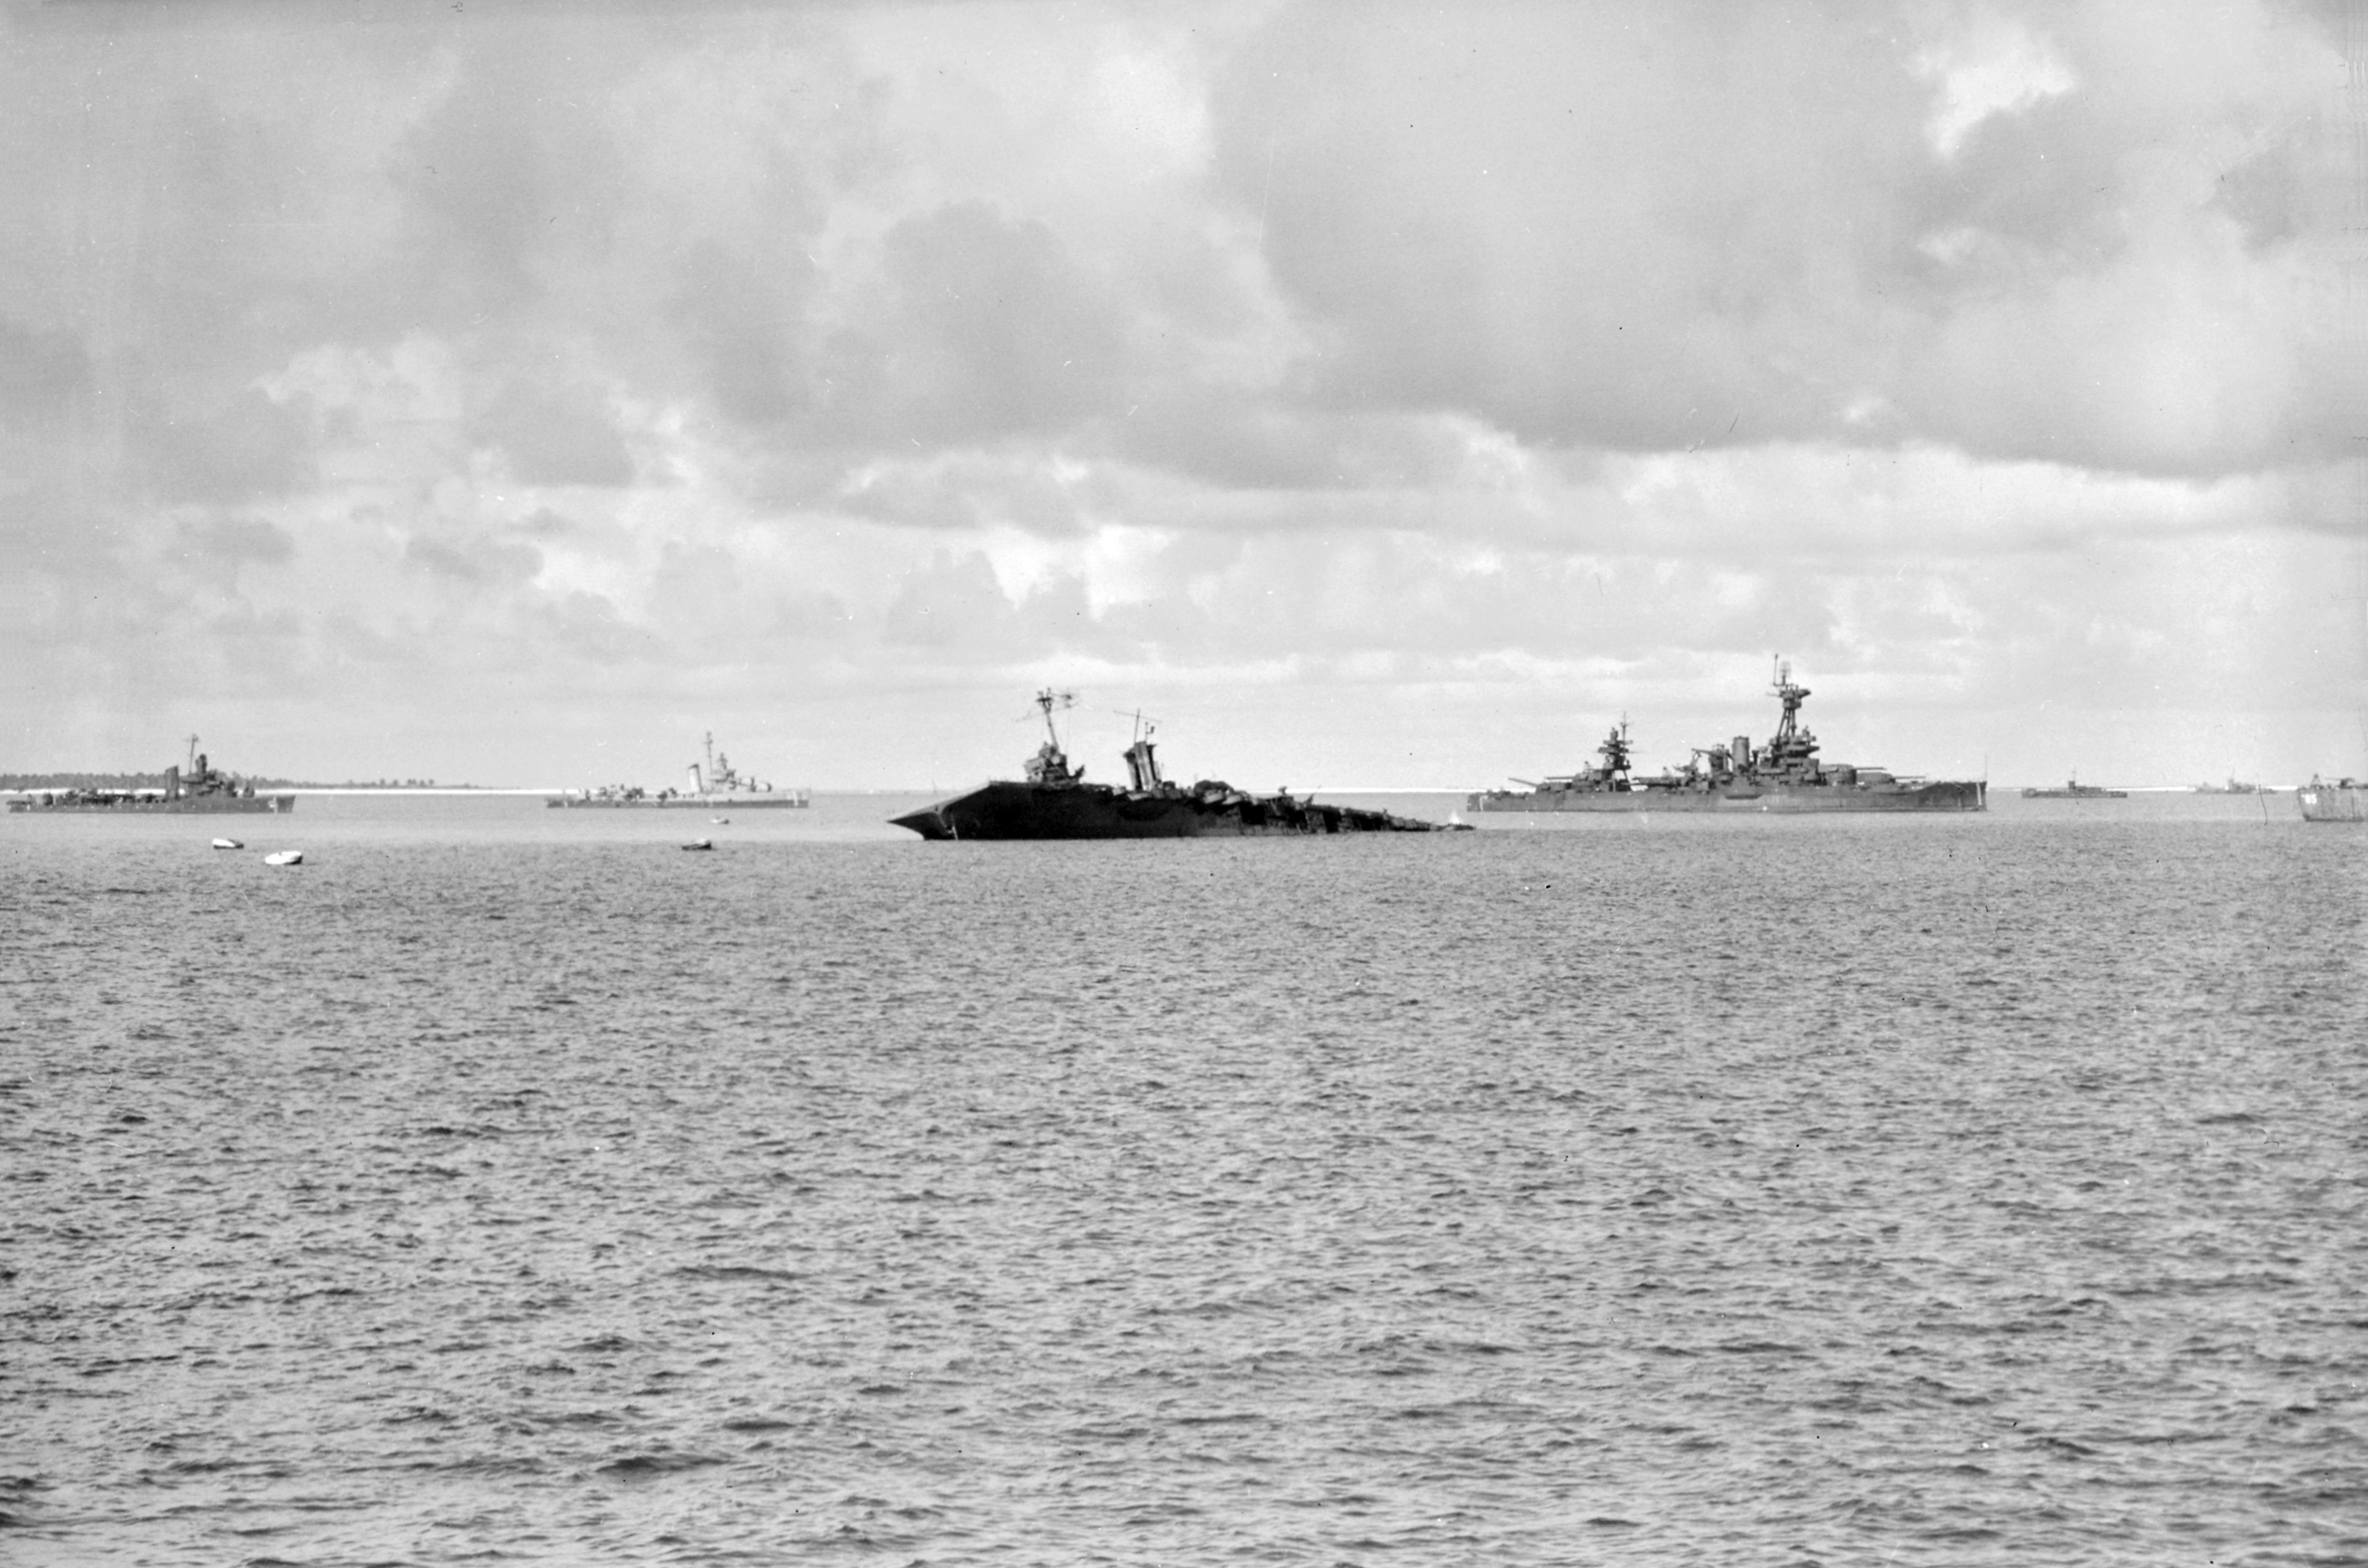 Saratoga sinking after atomic bomb blast, Bikini Atoll, Marshall islands, 25 Jul 1946, photo 2 of 2